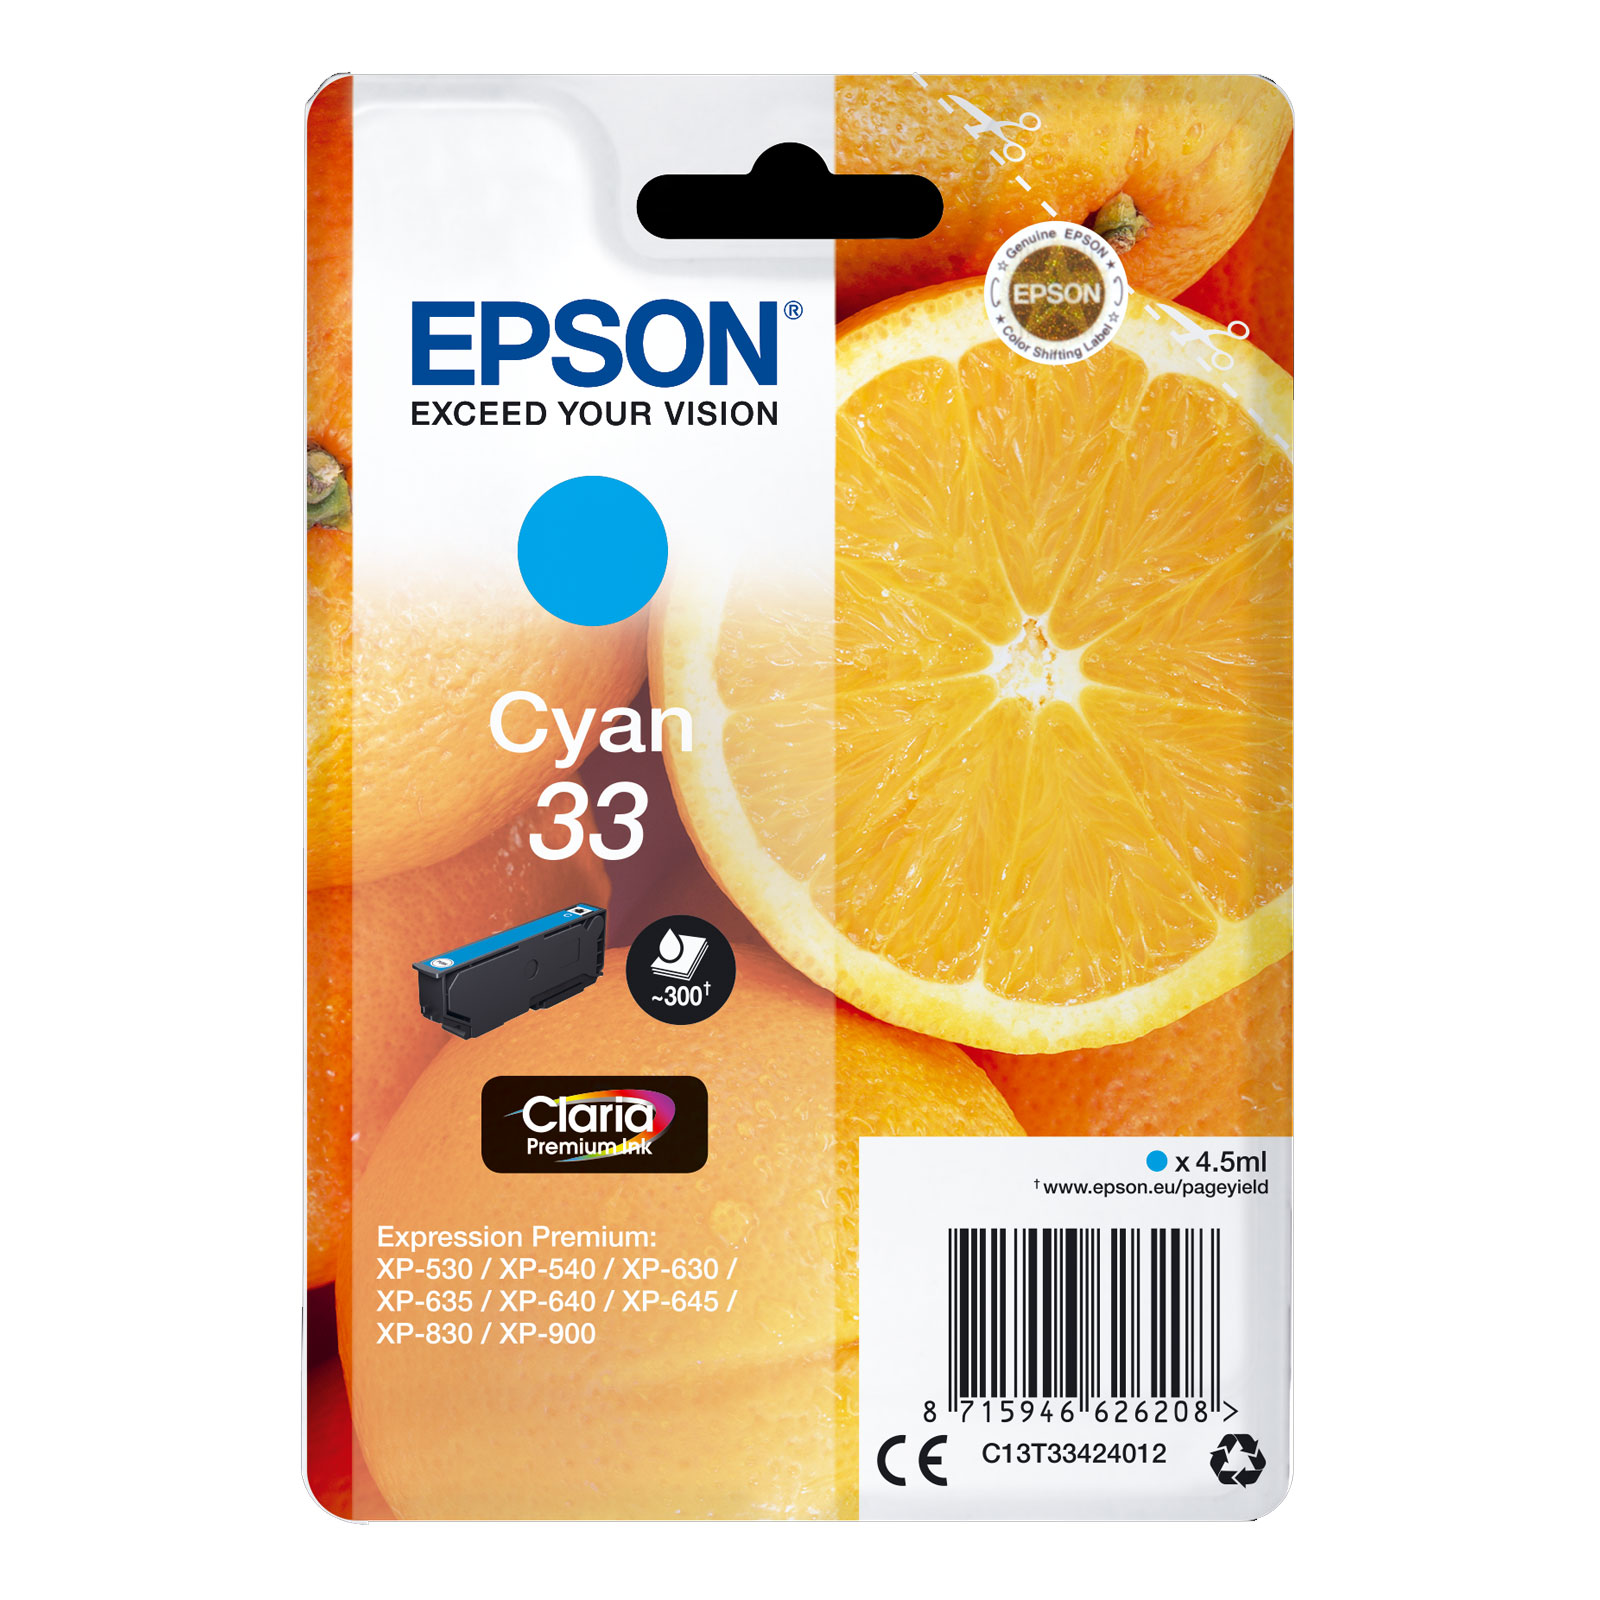 Epson C13T33424012 Singlepack 33 Claria Premium Ink Serie "Orange" Cyan